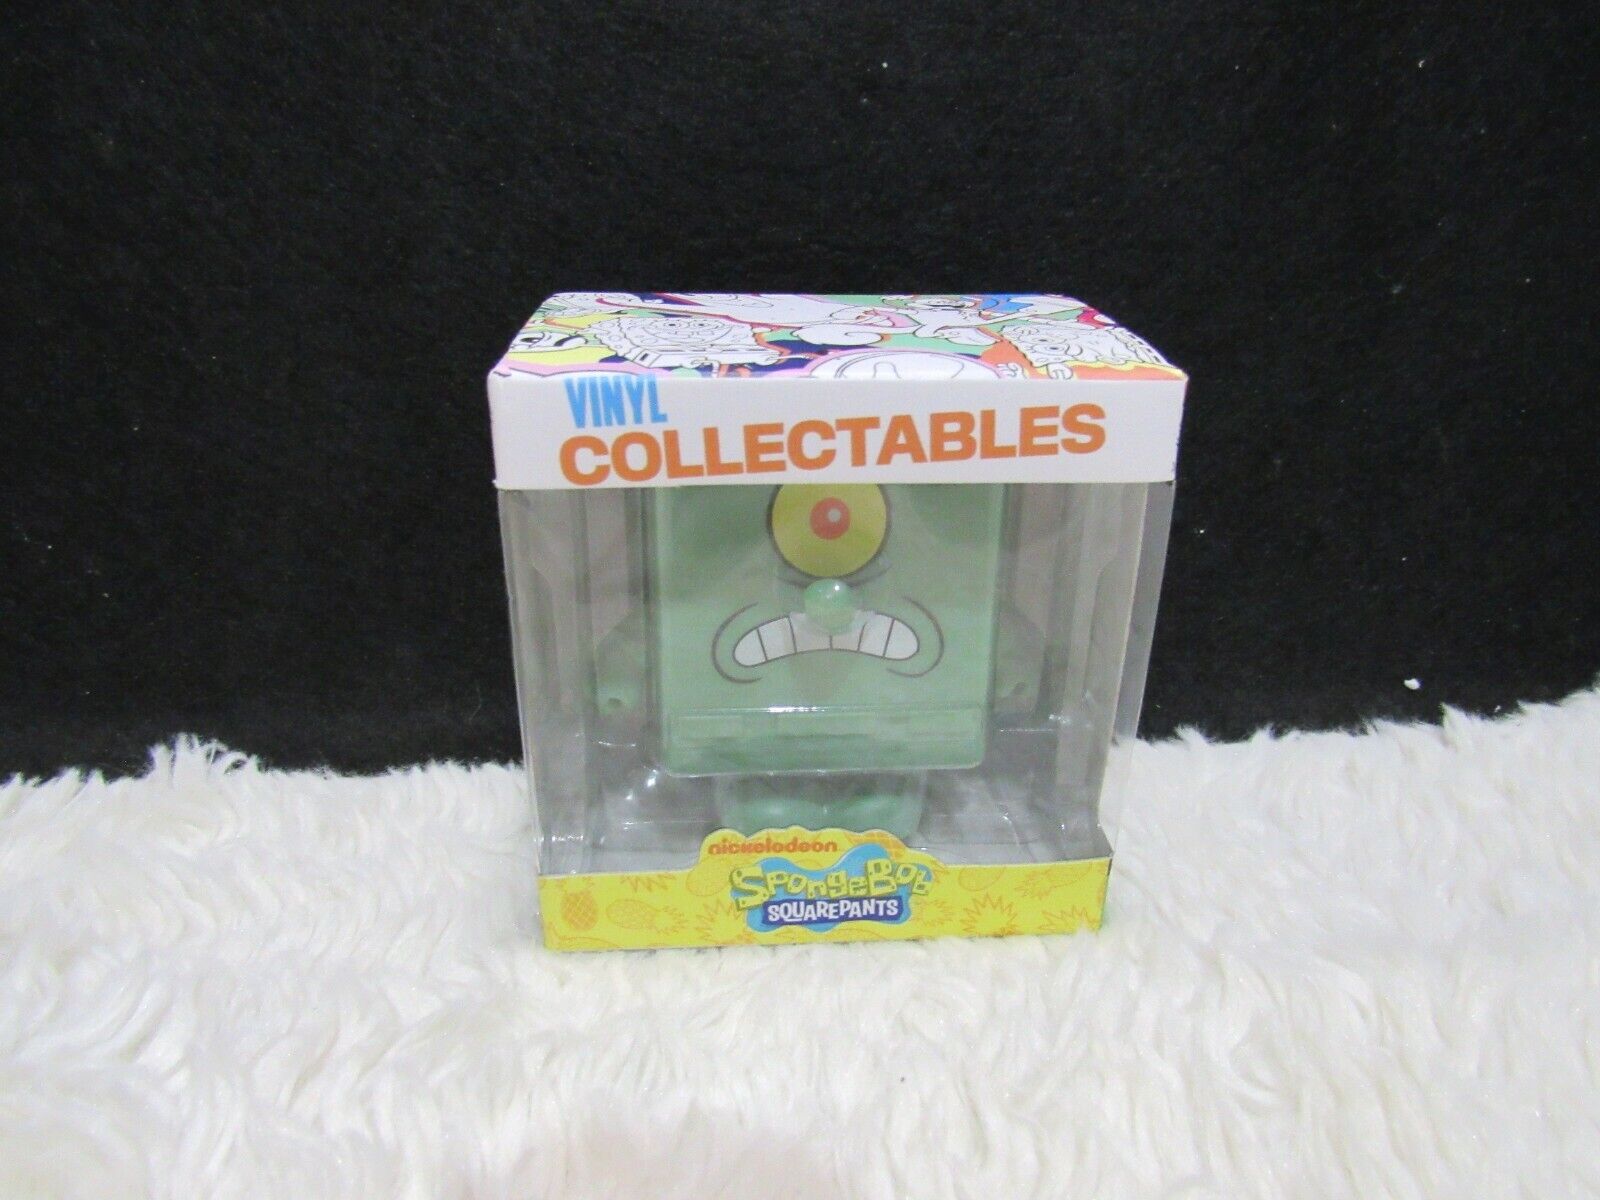 Vinyl Collectables Nickelodeon Spongebob Squarepants Plankton Figurine, NEW